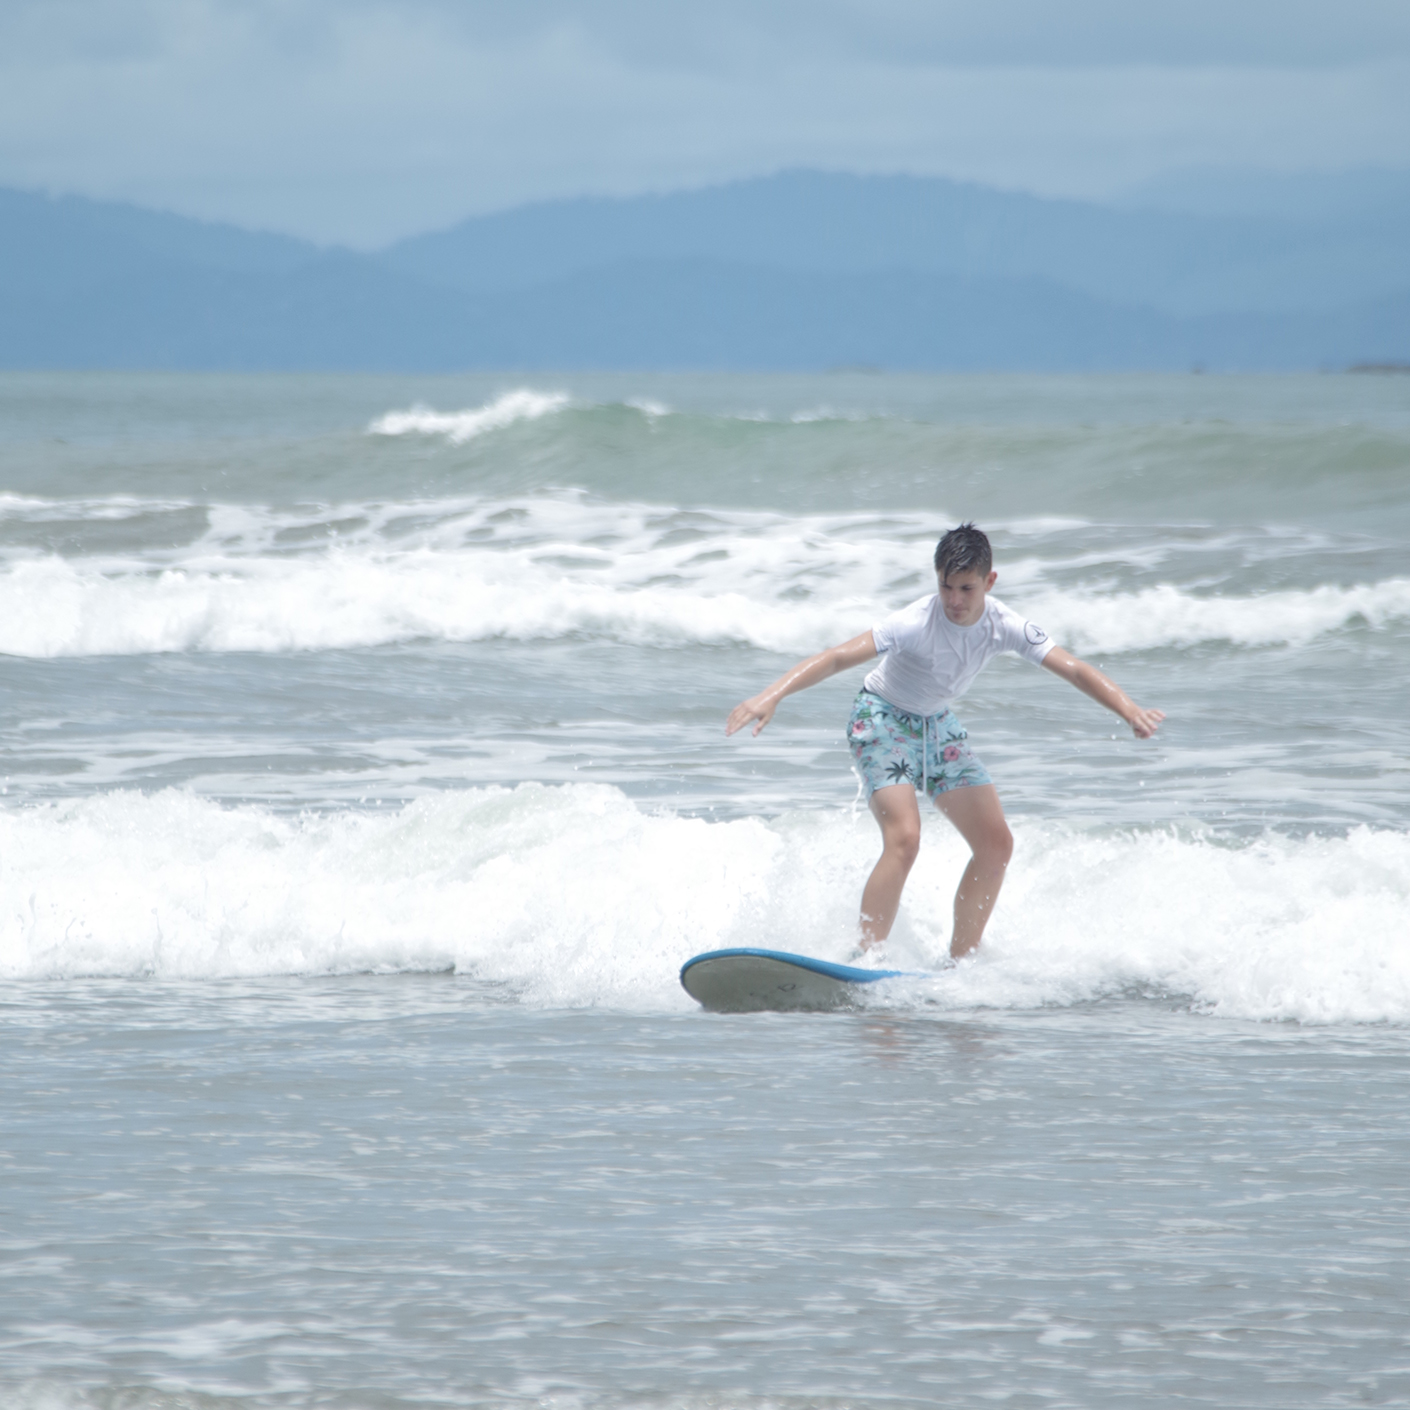 Surfing on the Costa Rica Pura Vida trip